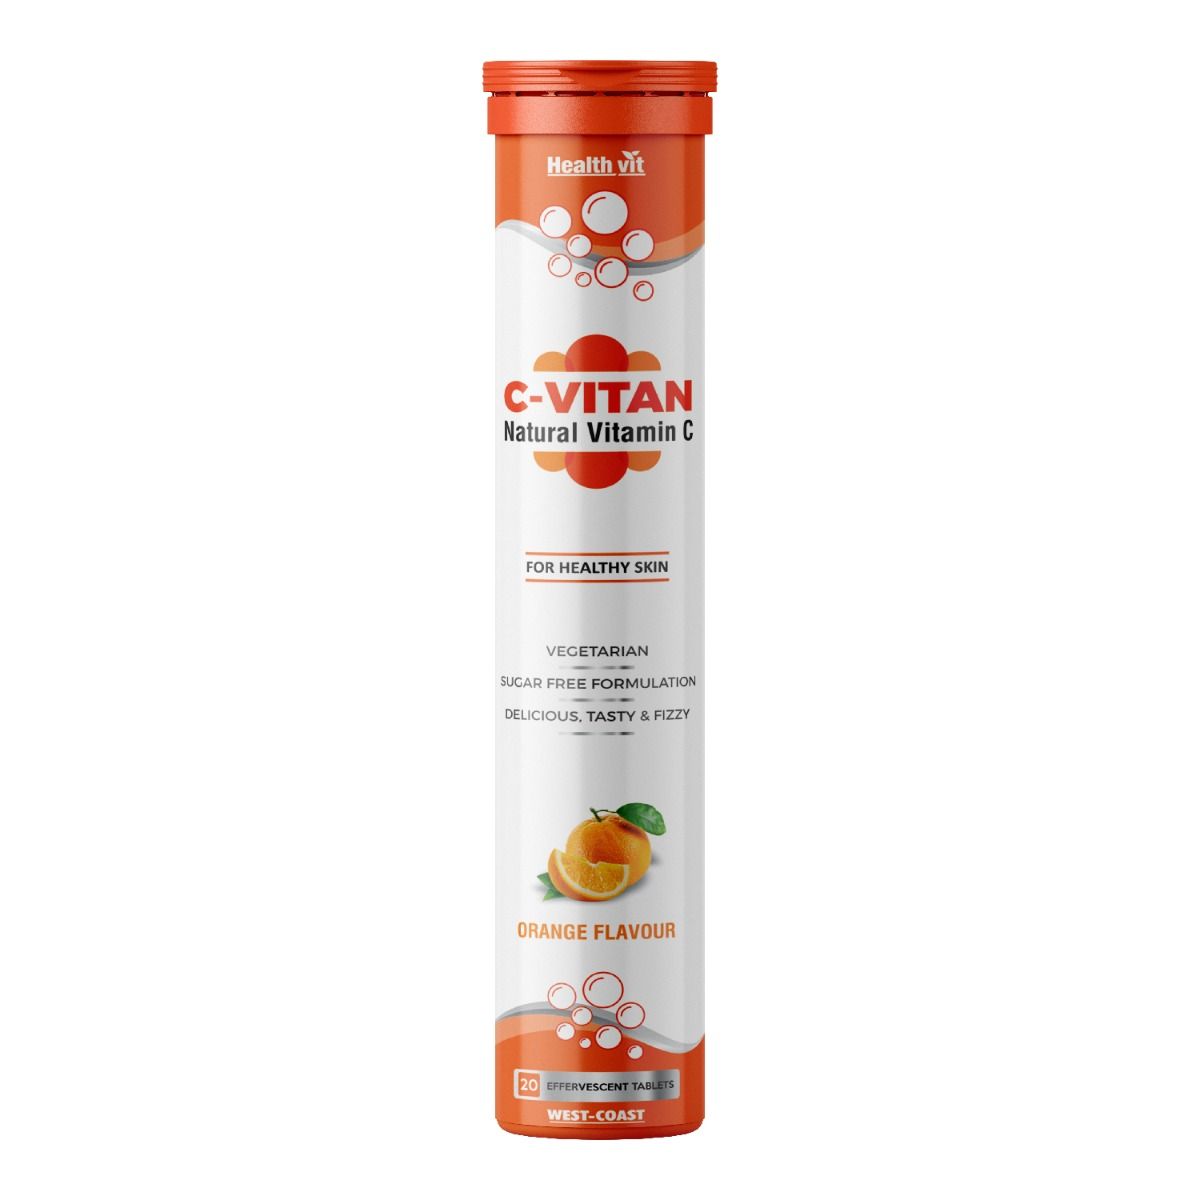 Buy Healthvit C-Vitan Natural Vitamin C 1000mg For Healthy Skin - 20 Effervescent Tablets (Orange Flavour) Online